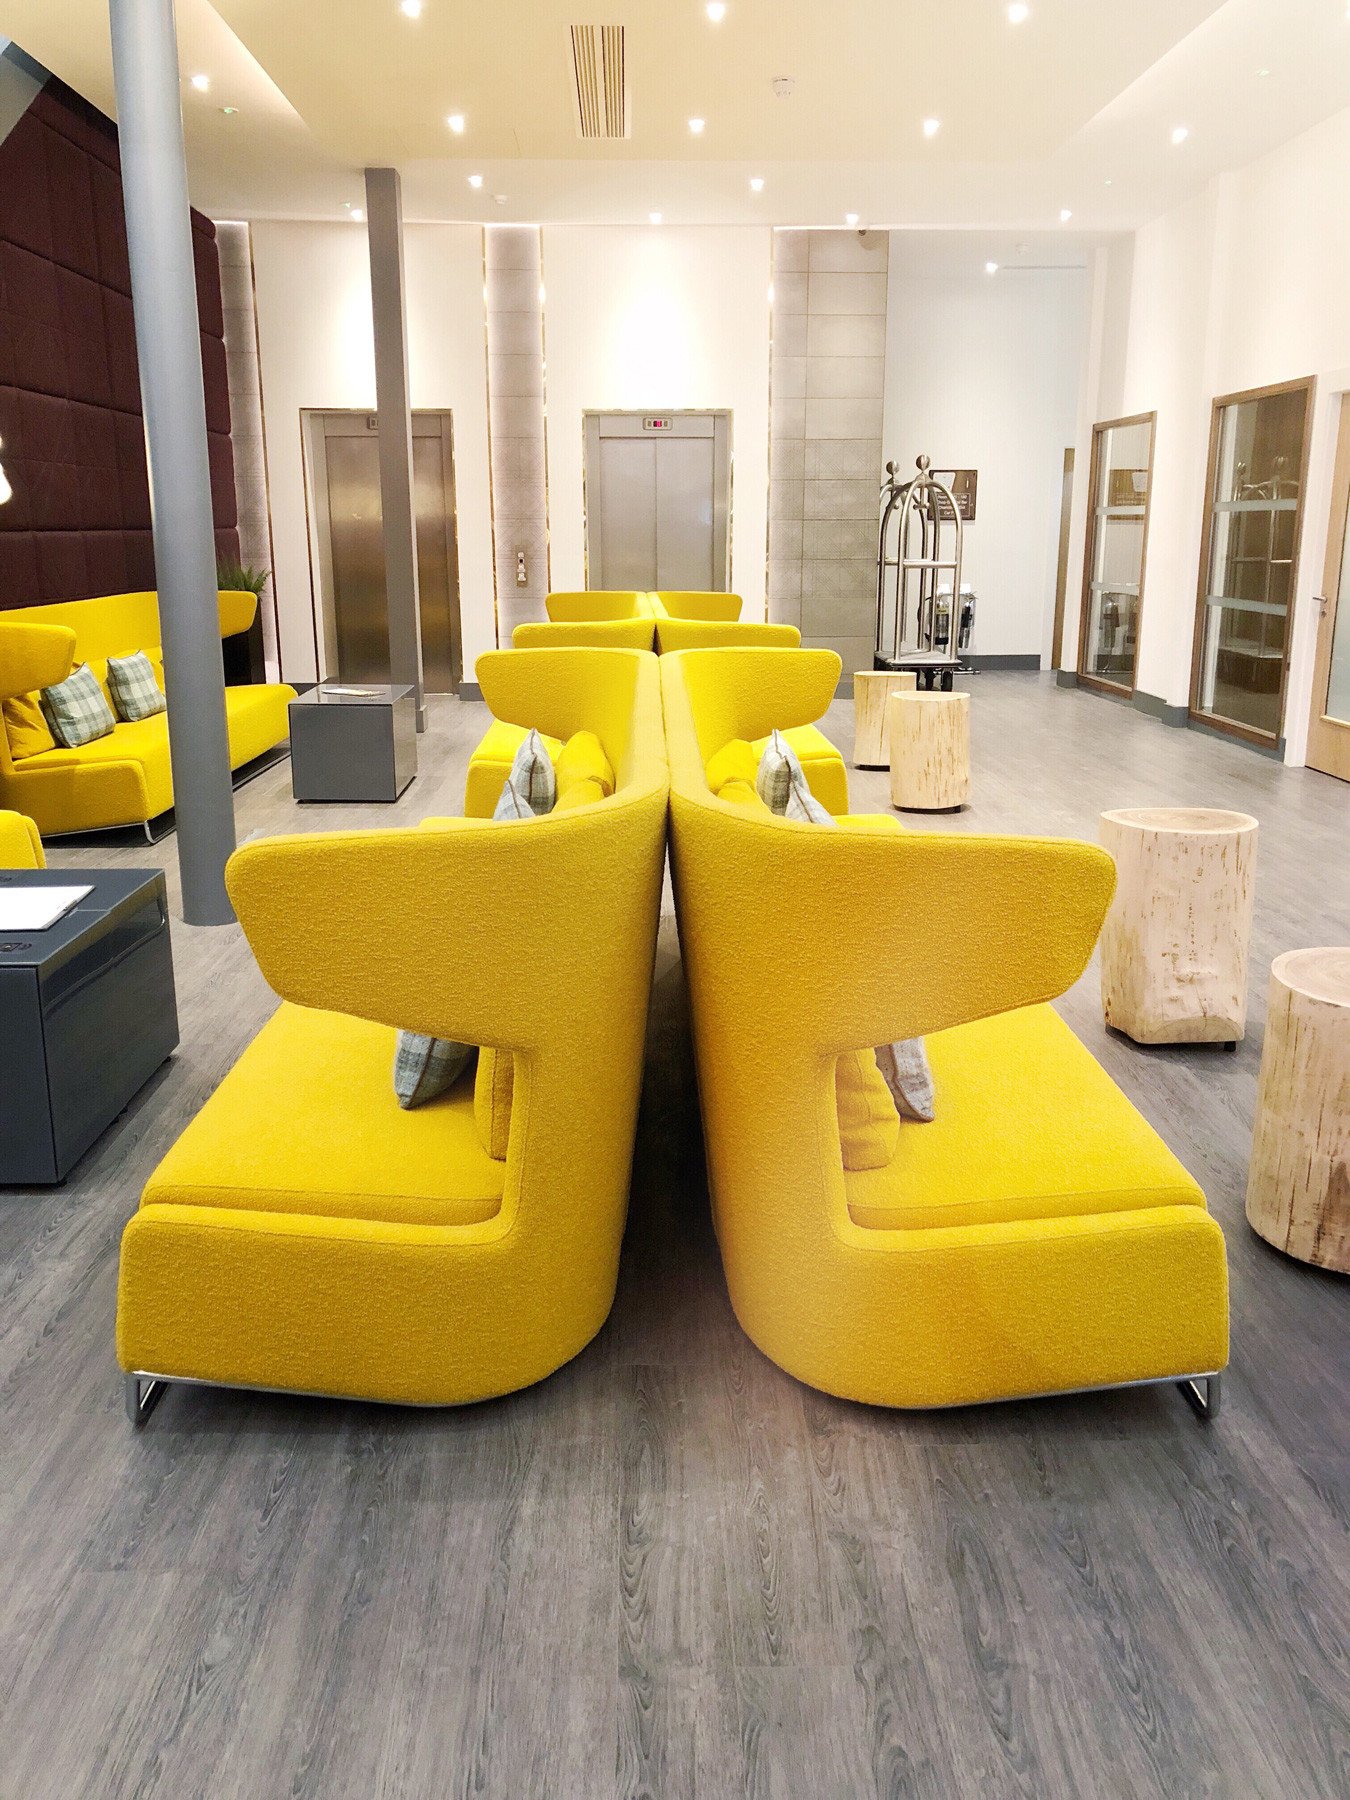 yellow sofas at The Sandman Signature Hotel, Aberdeen